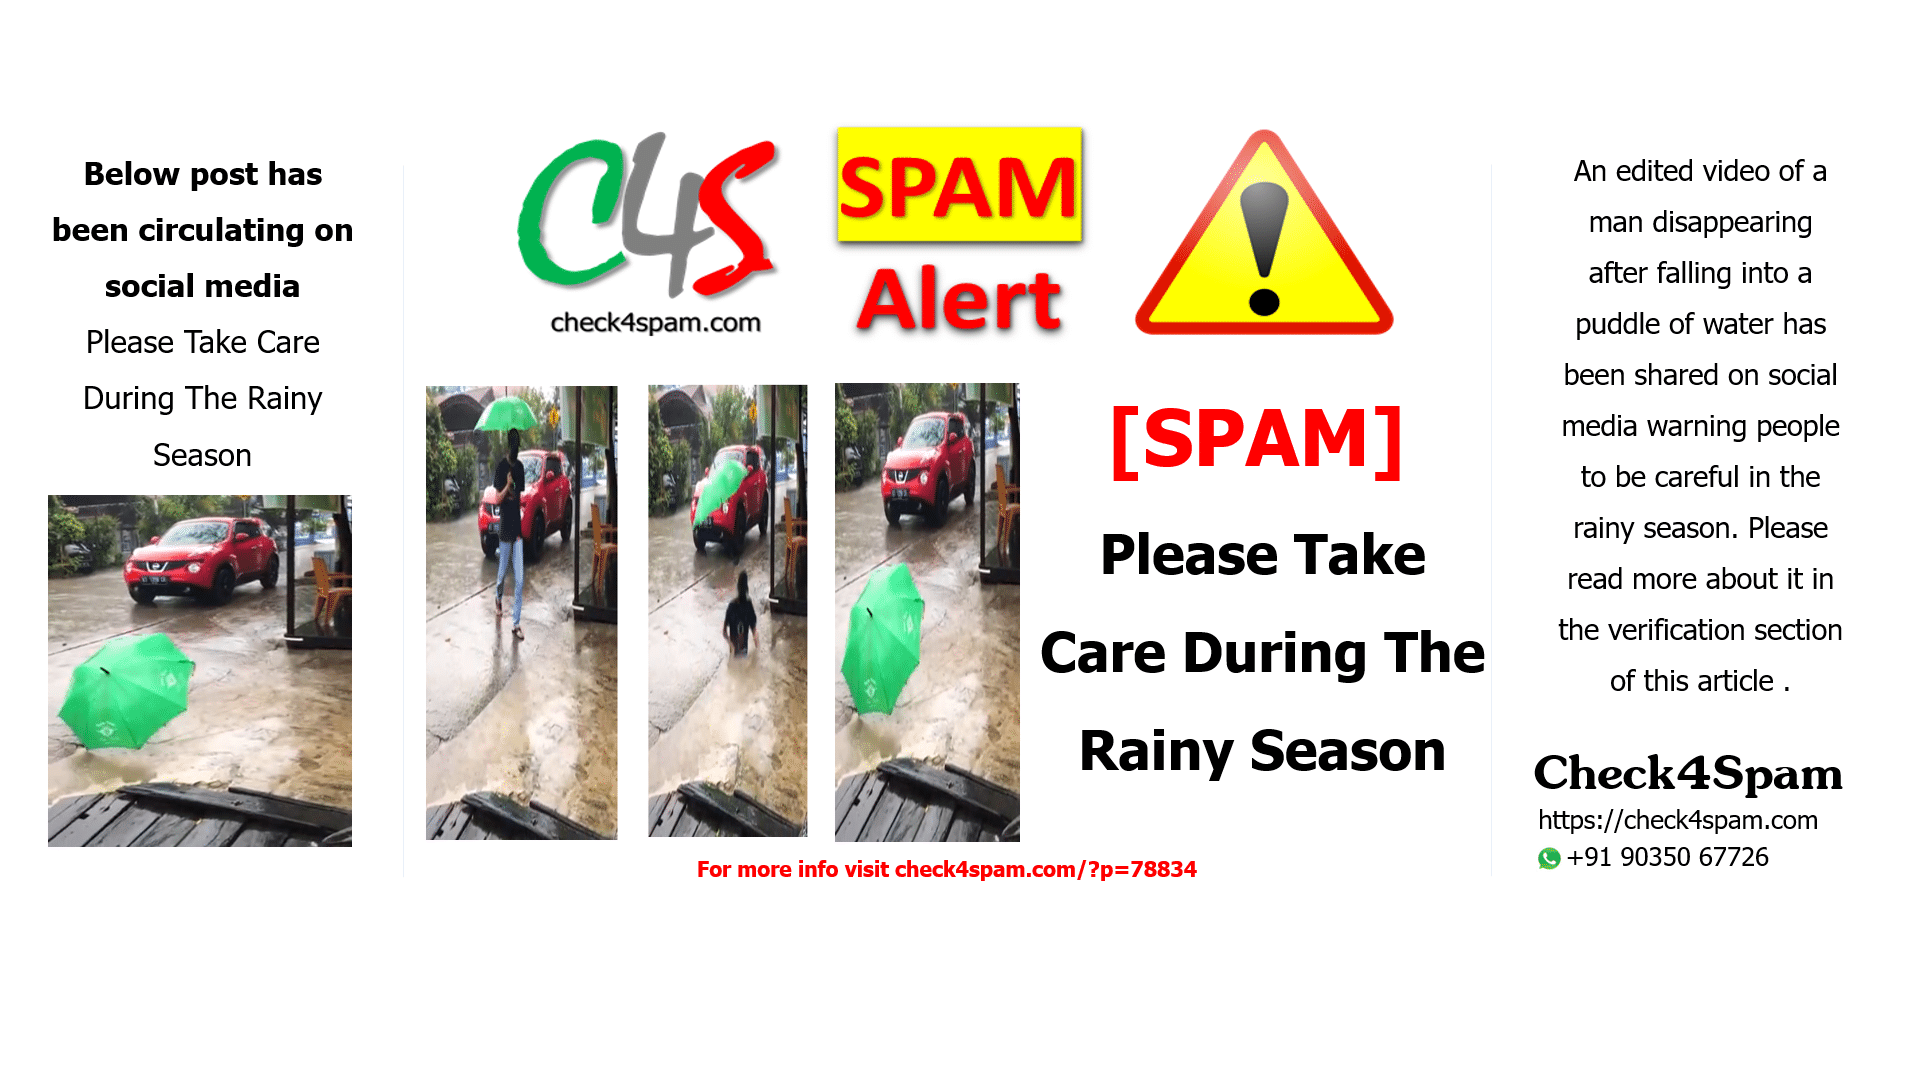 Please Take Care During The Rainy Season